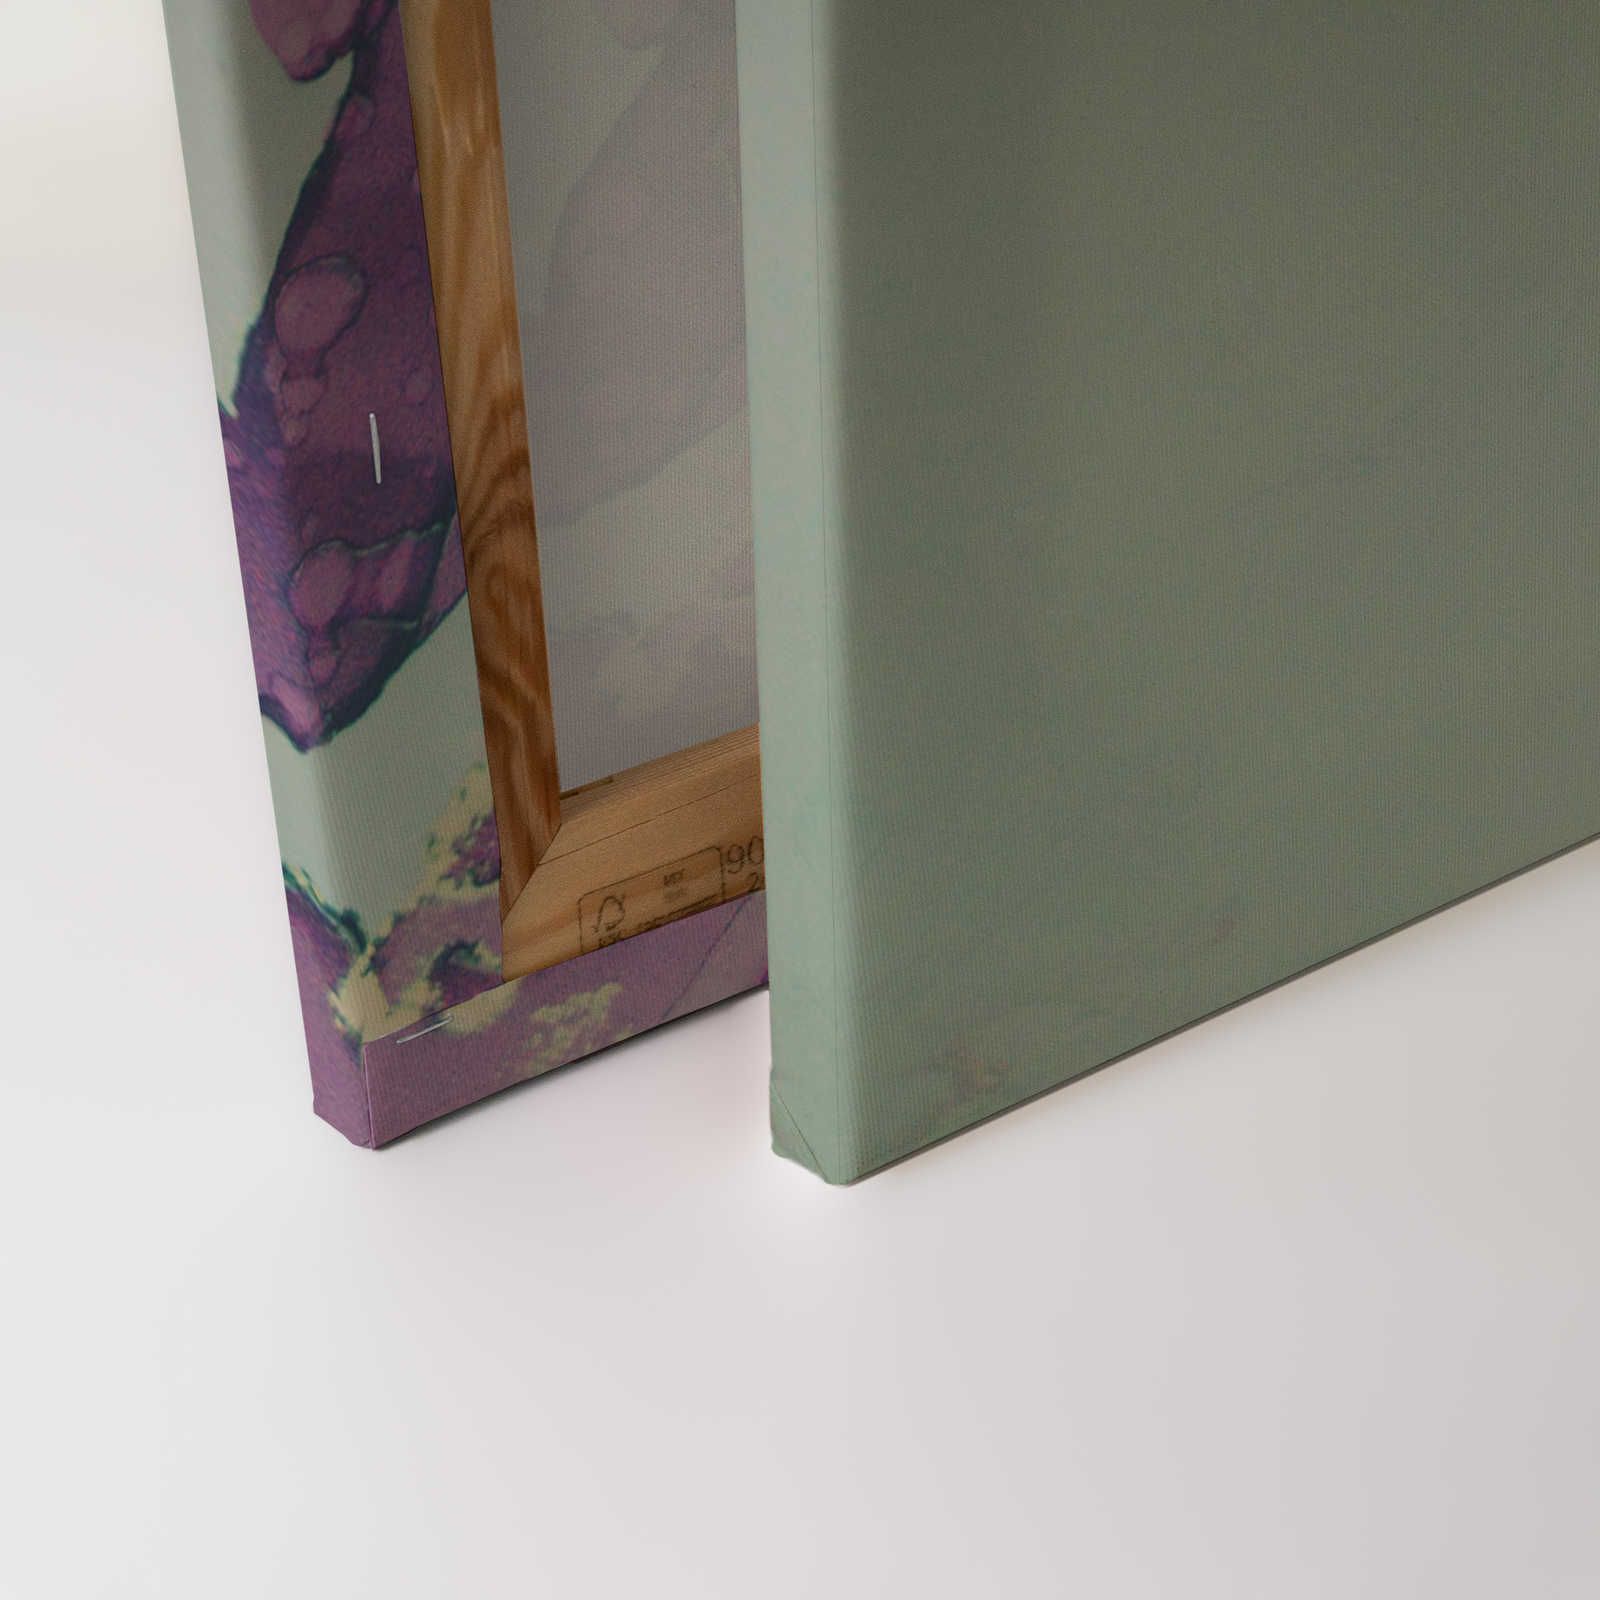             Acryl Design Leinwandbild Frauengesicht in Türkis & Violett – 0,90 m x 0,60 m
        